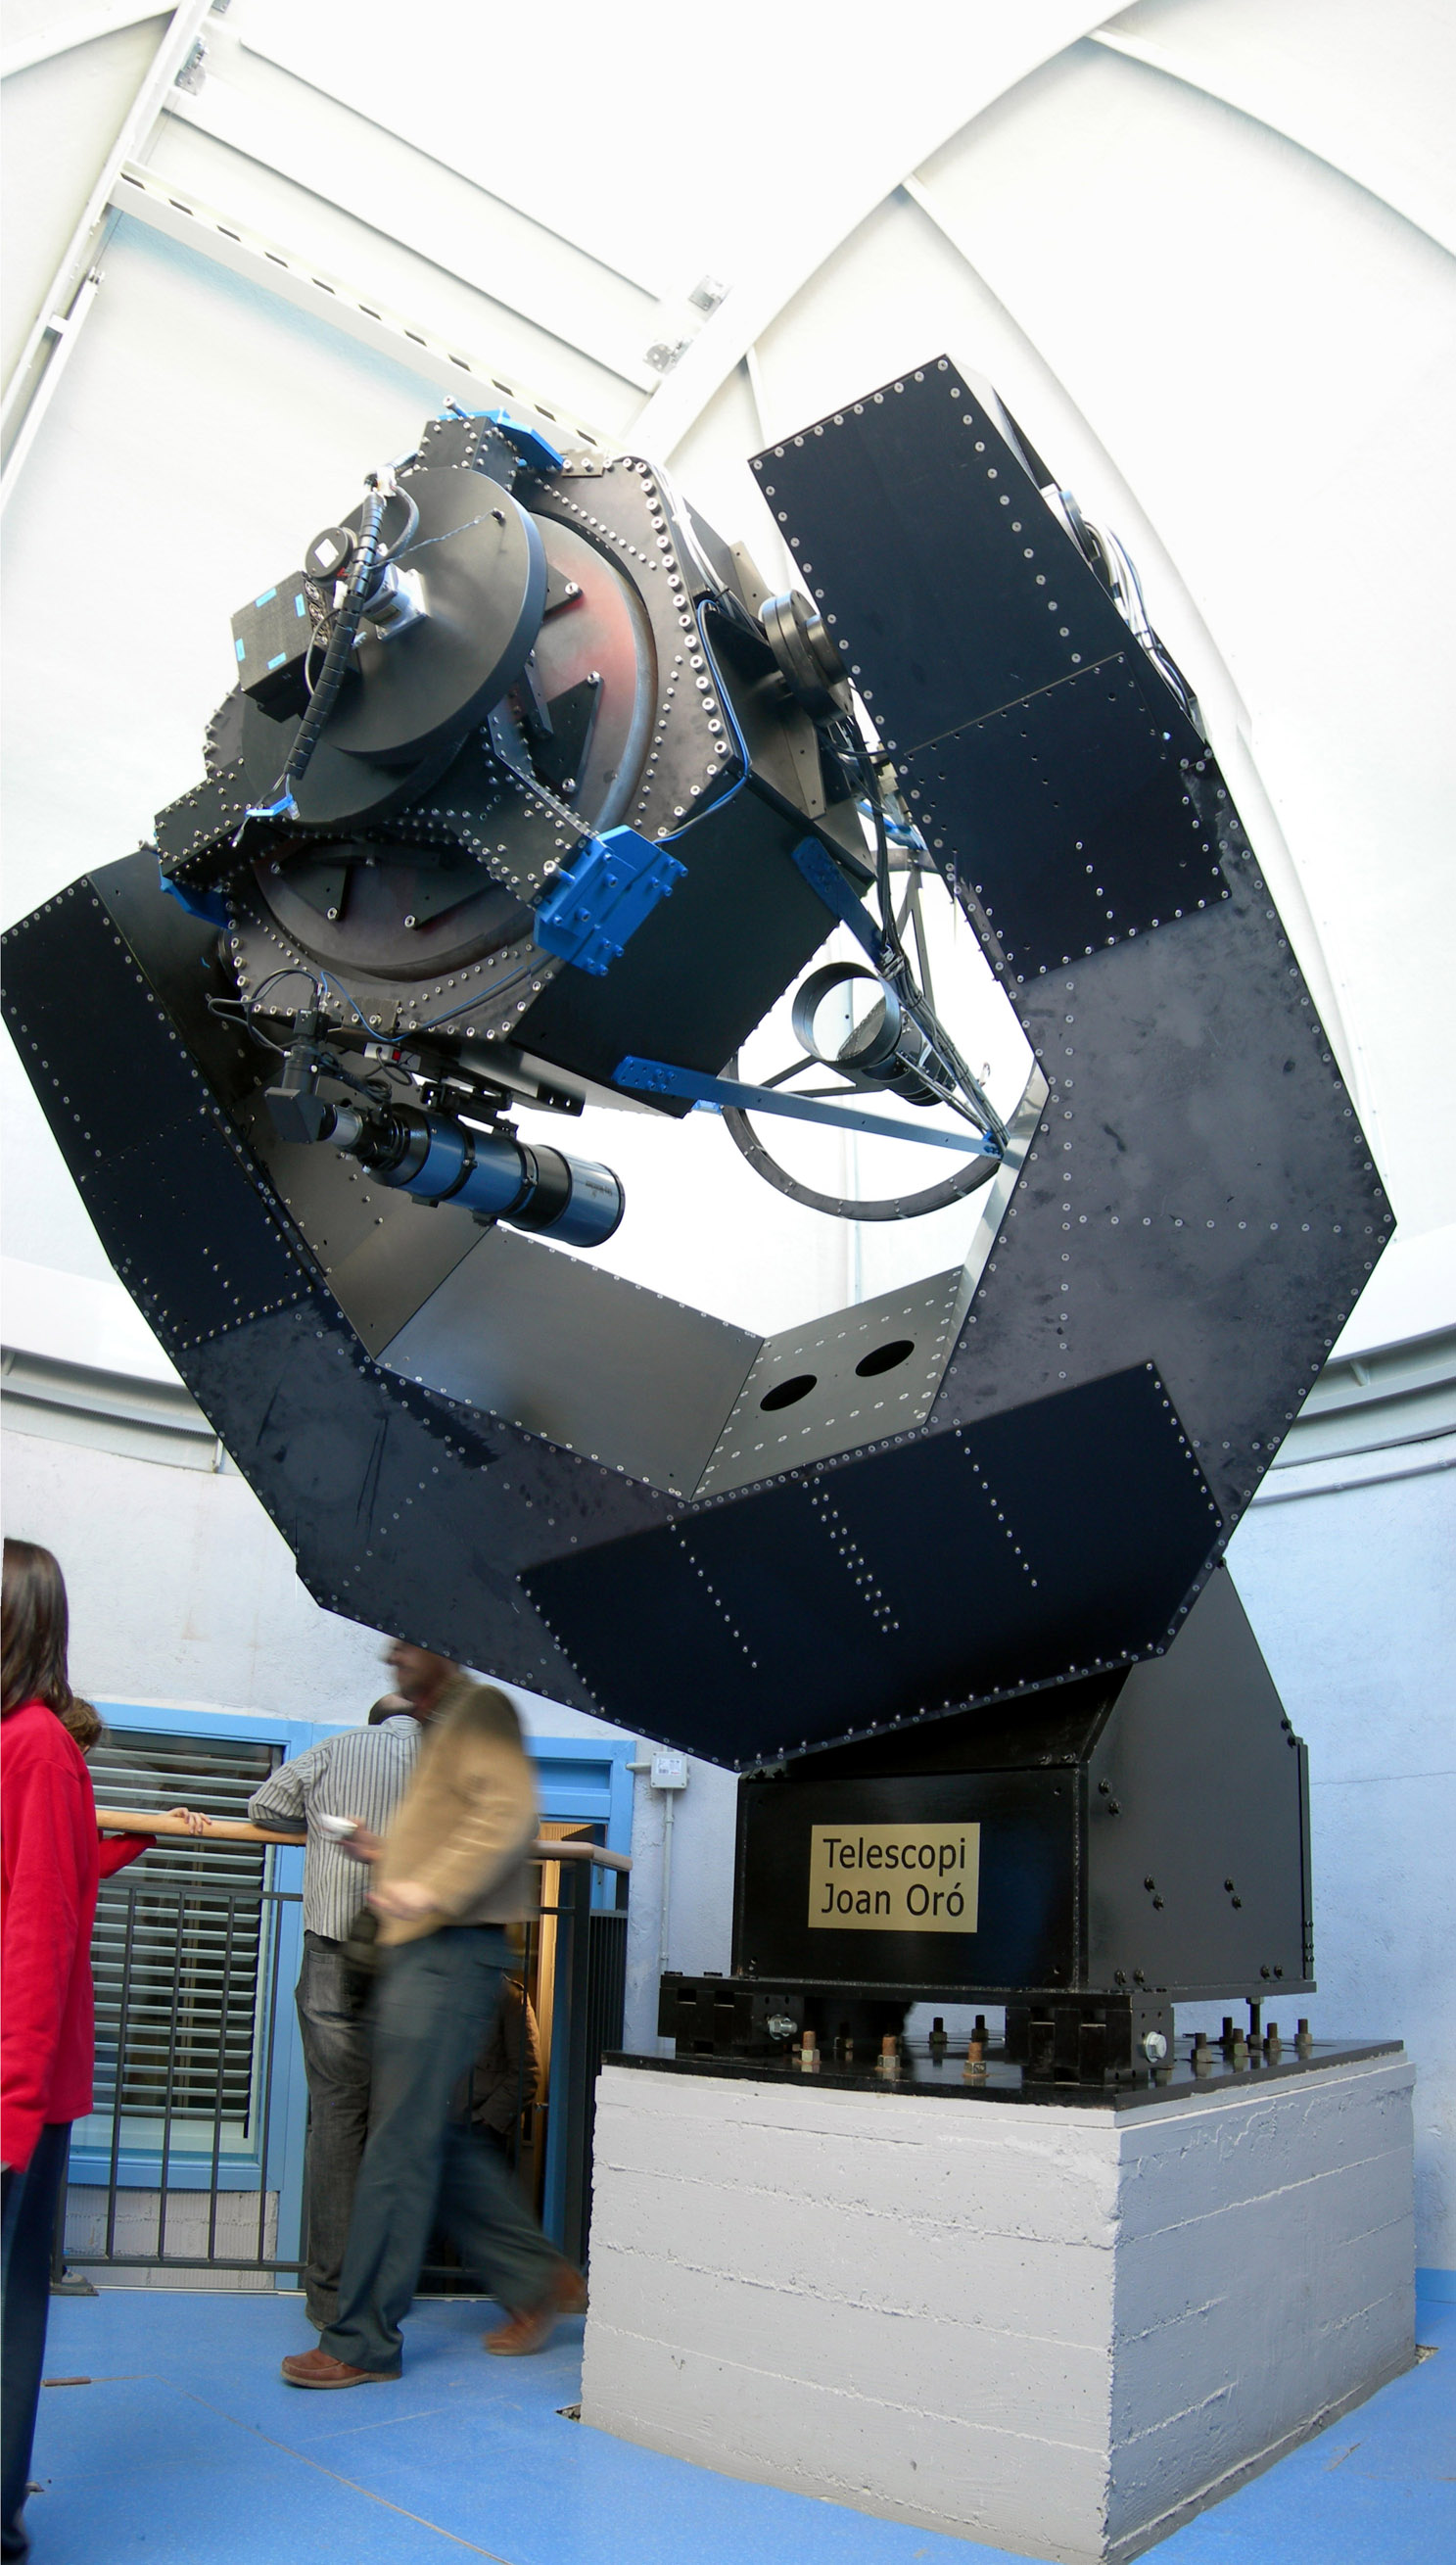 Telescopi Joan Oró